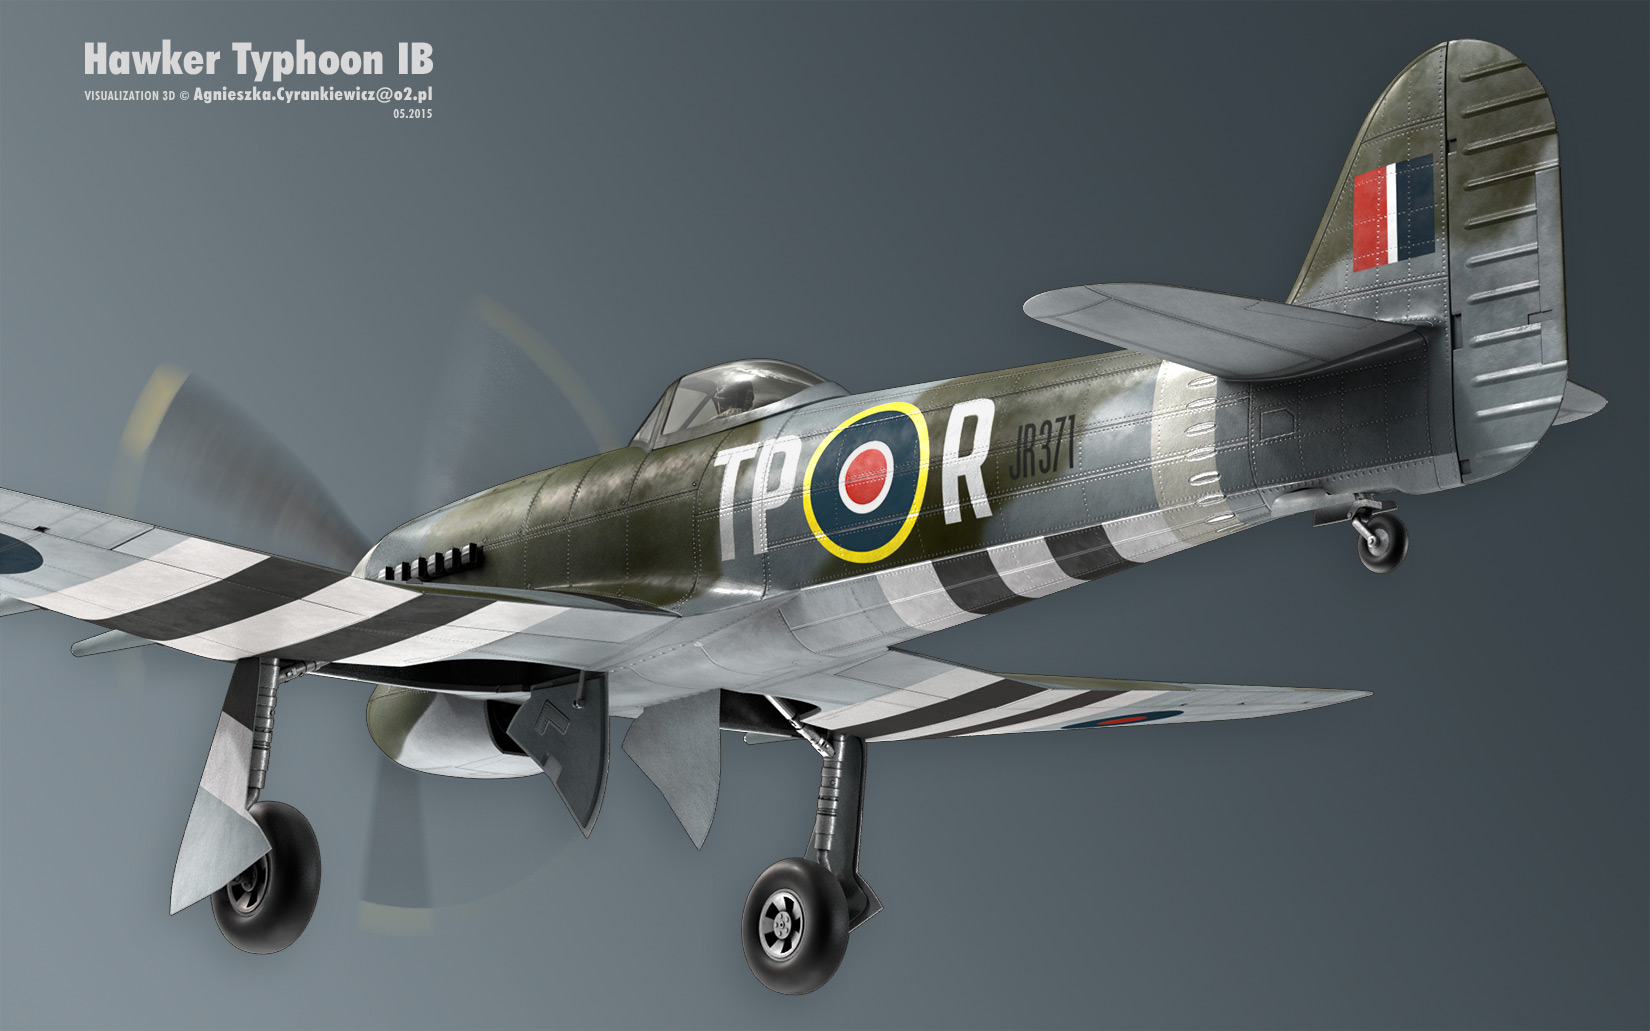 Hawker Typhoon IB, airplane, plane, WWII, war